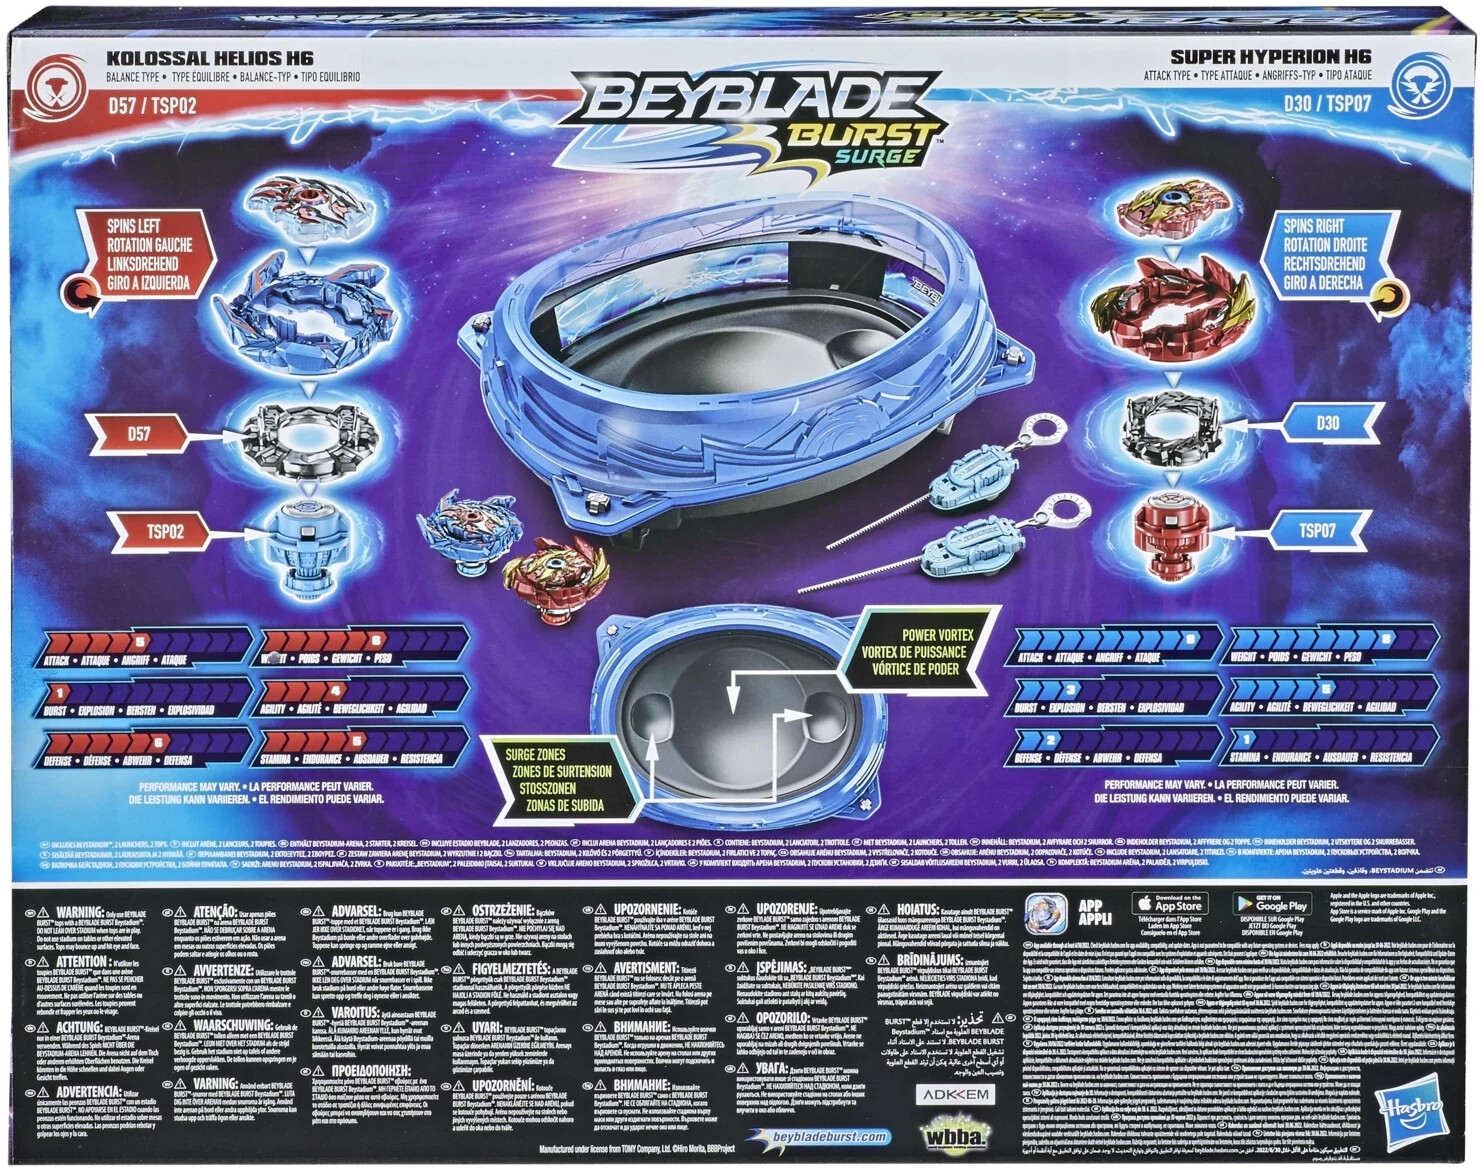 Beyblade Speed Storm Poder das Centelhas Hasbro - F0581 - Hasbro